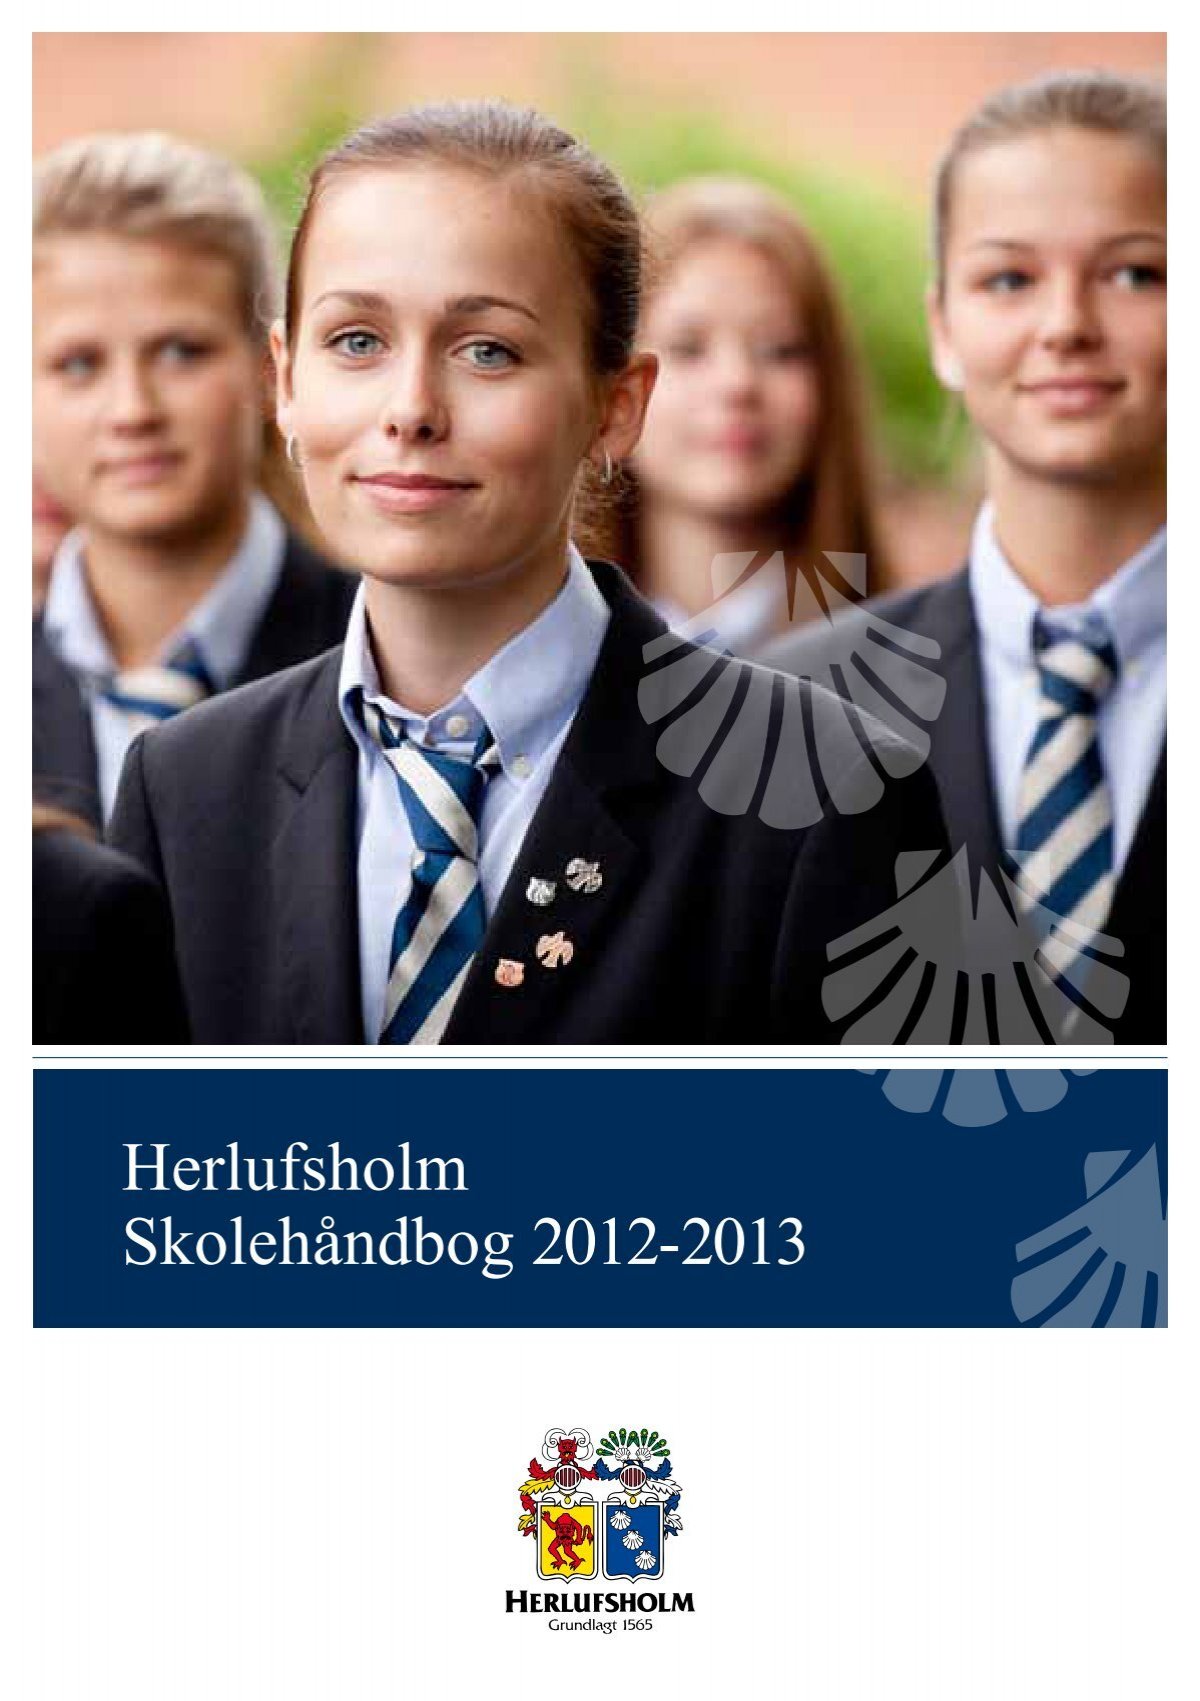 Herlufsholm 2012-2013